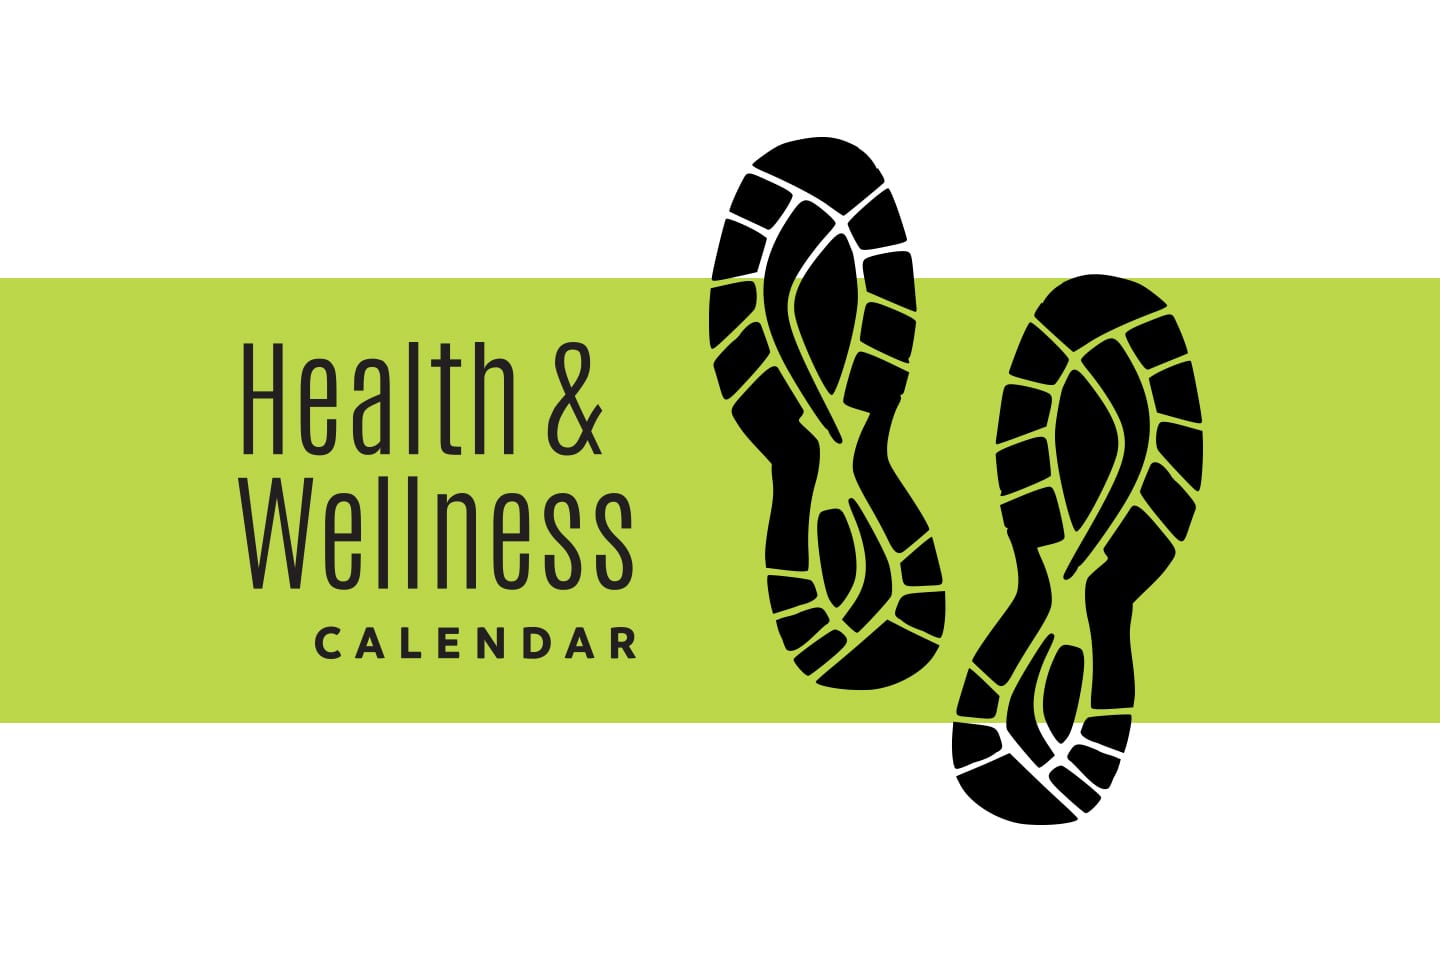 Health & Wellness Calendar - HealthScopeHealthScope